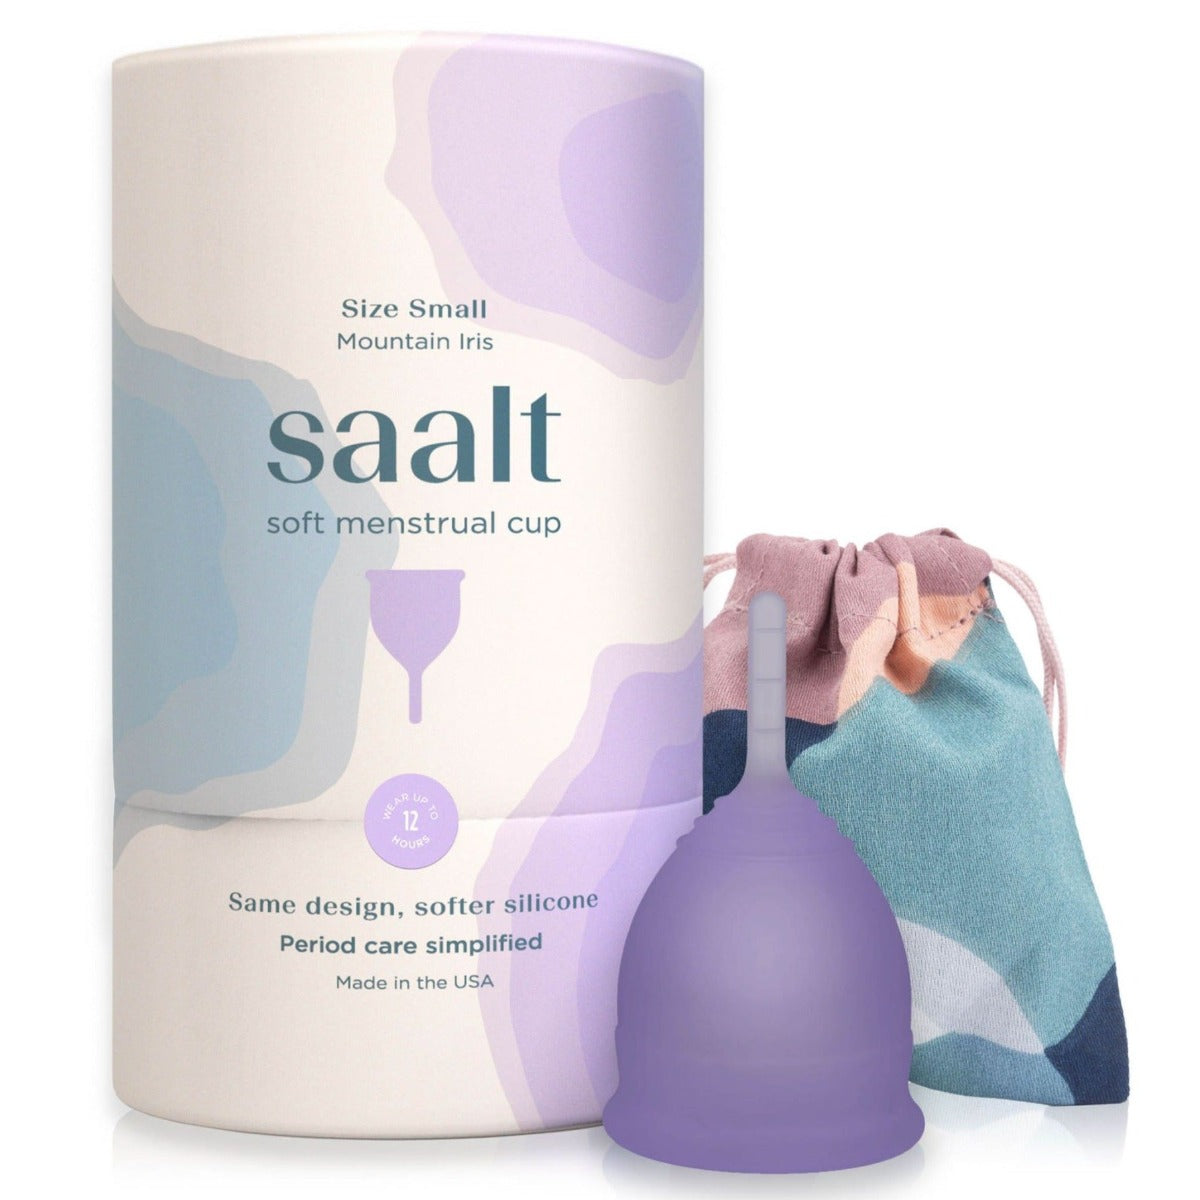 Saalt Soft Menstrual Cup | Mountain Iris Small | The Period Co.